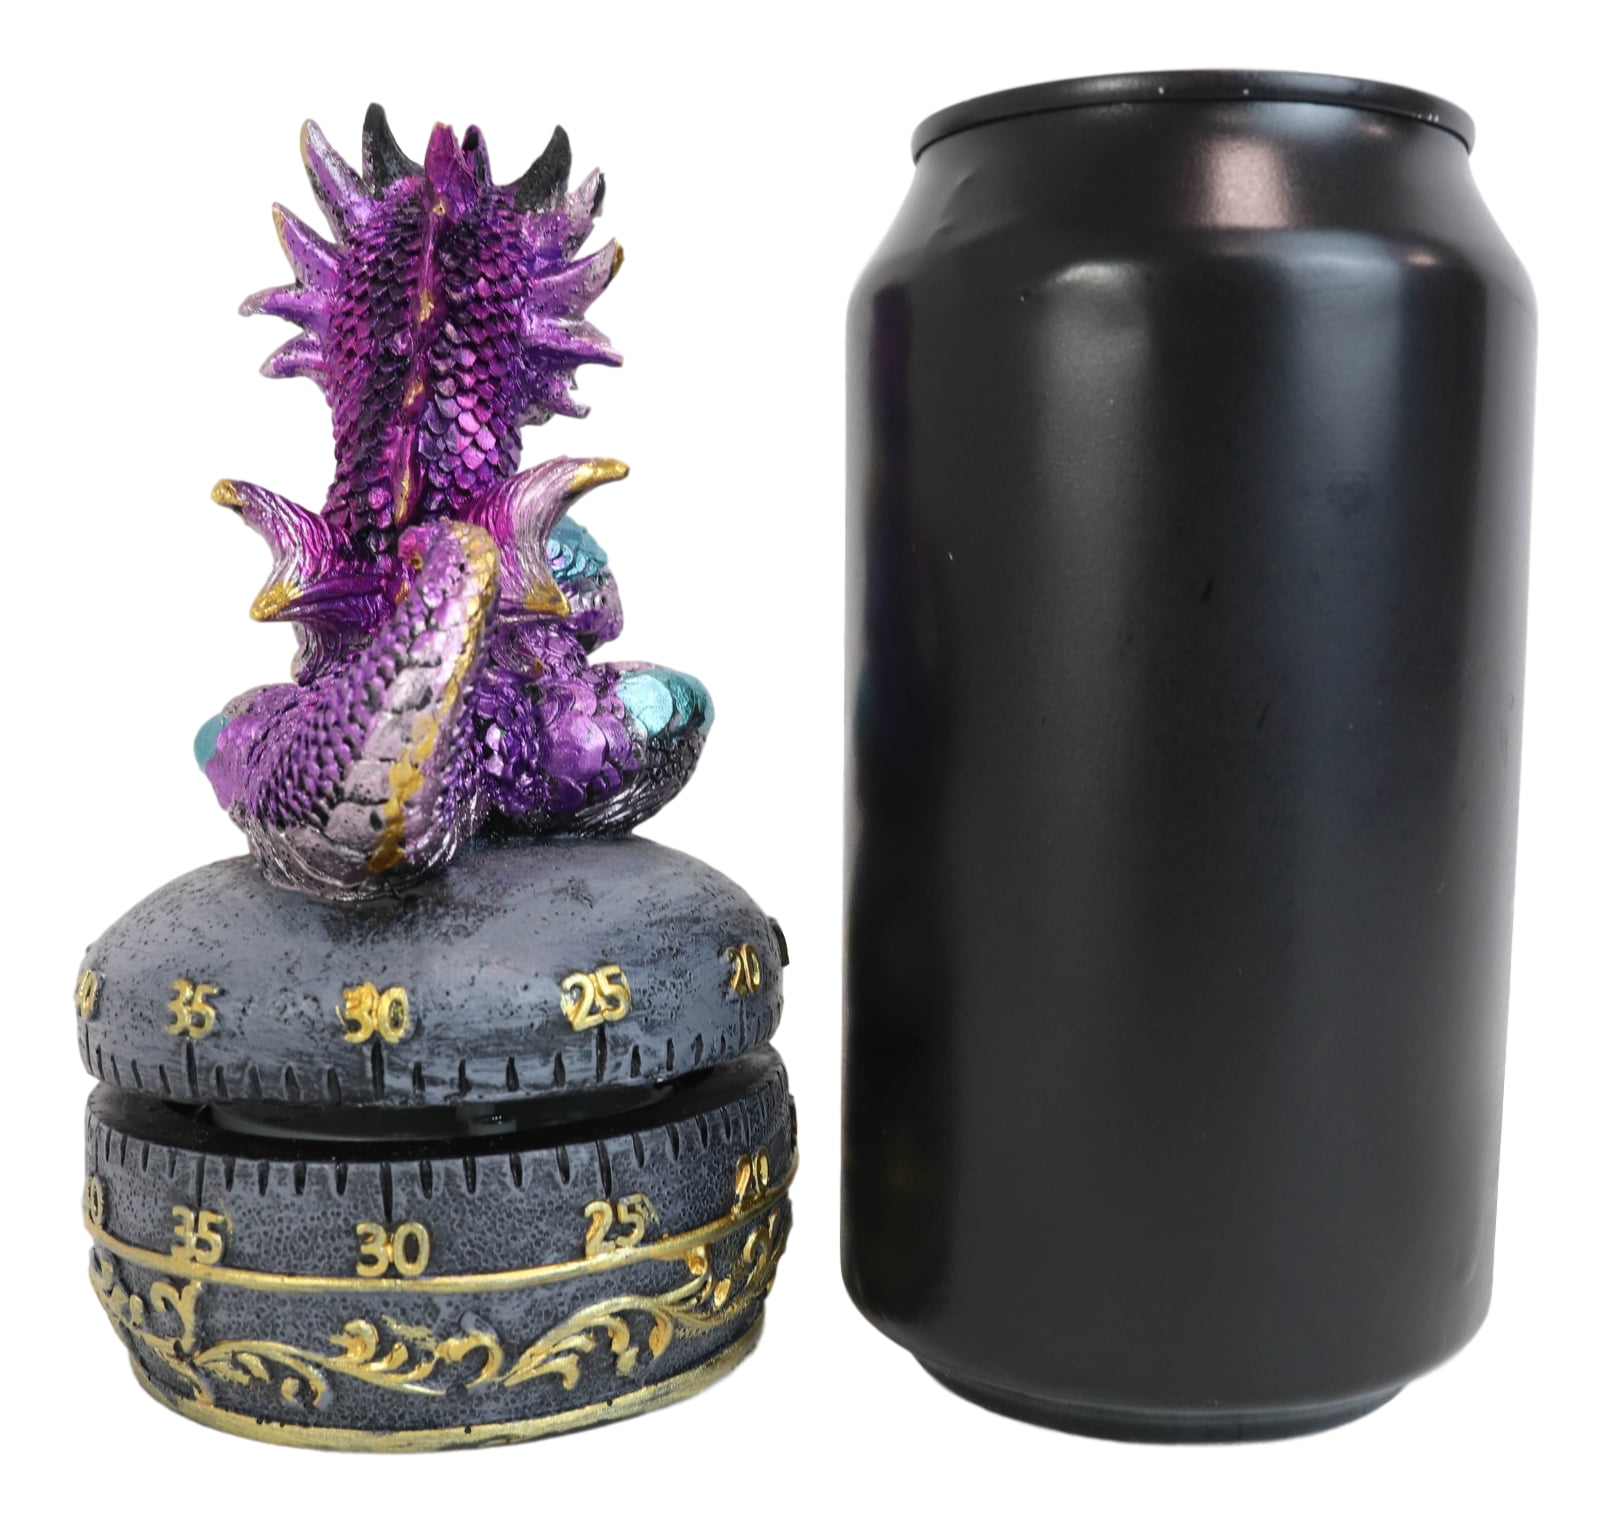 Details about  / Purple Baby Wyrmling Dragon Holding Egg Decorative Kitchen Timer Figurine 60 Min